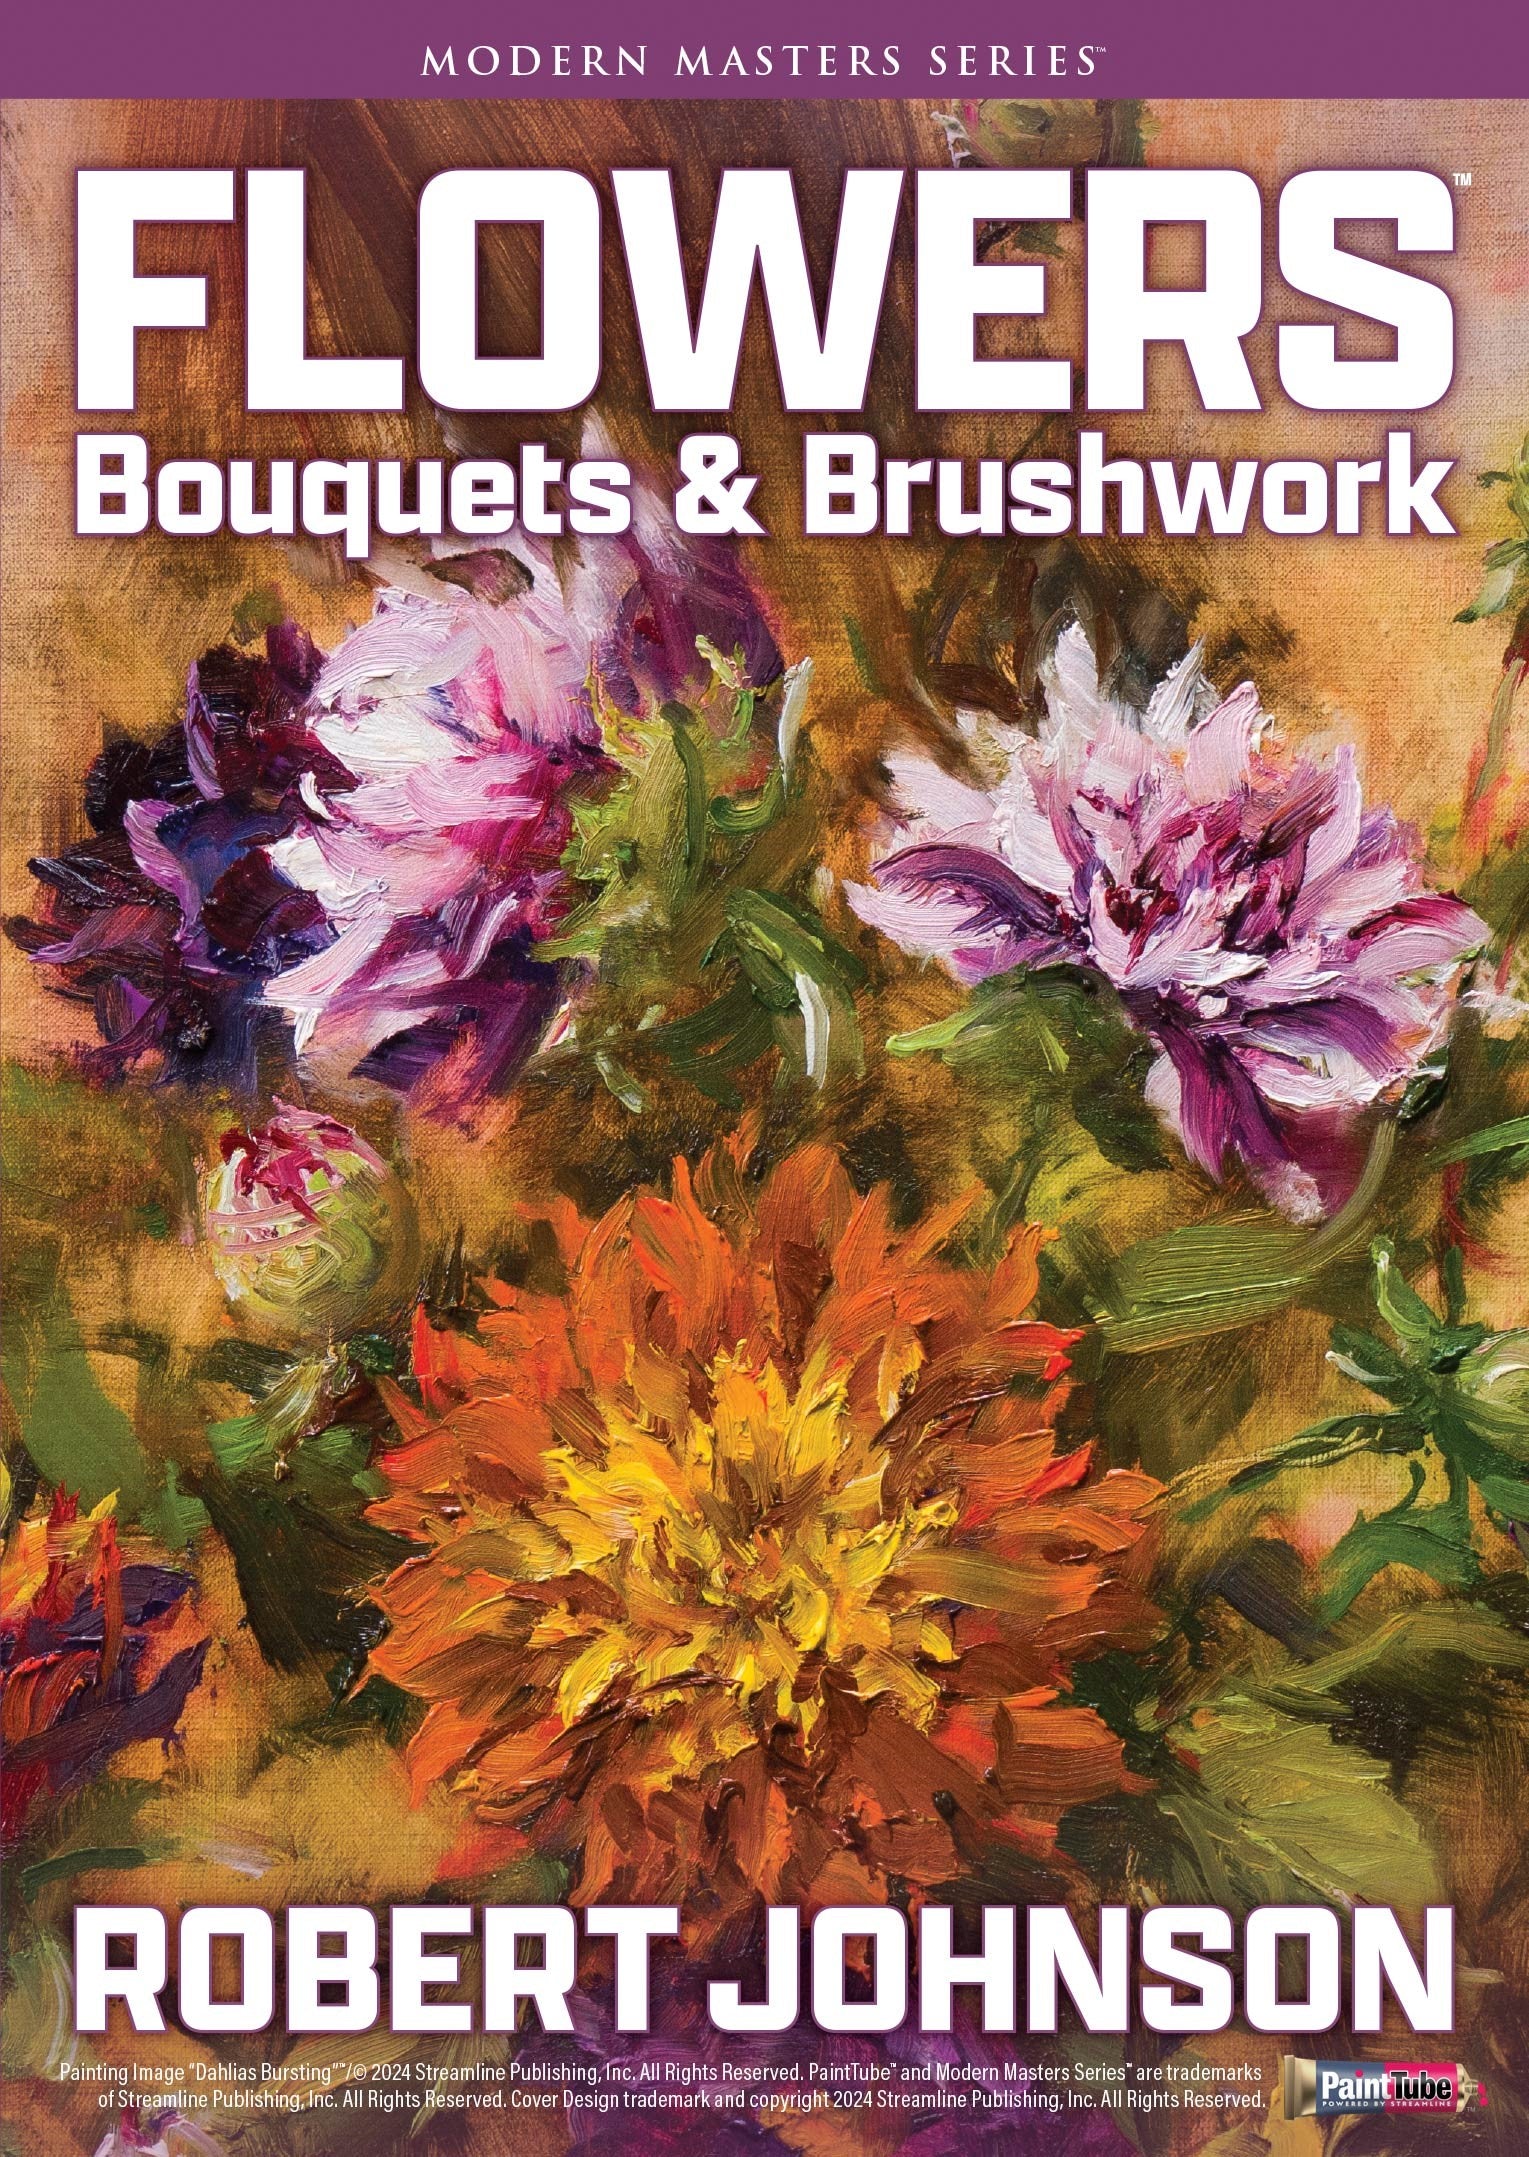 Robert Johnson: Flowers - Bouquets & Brushwork